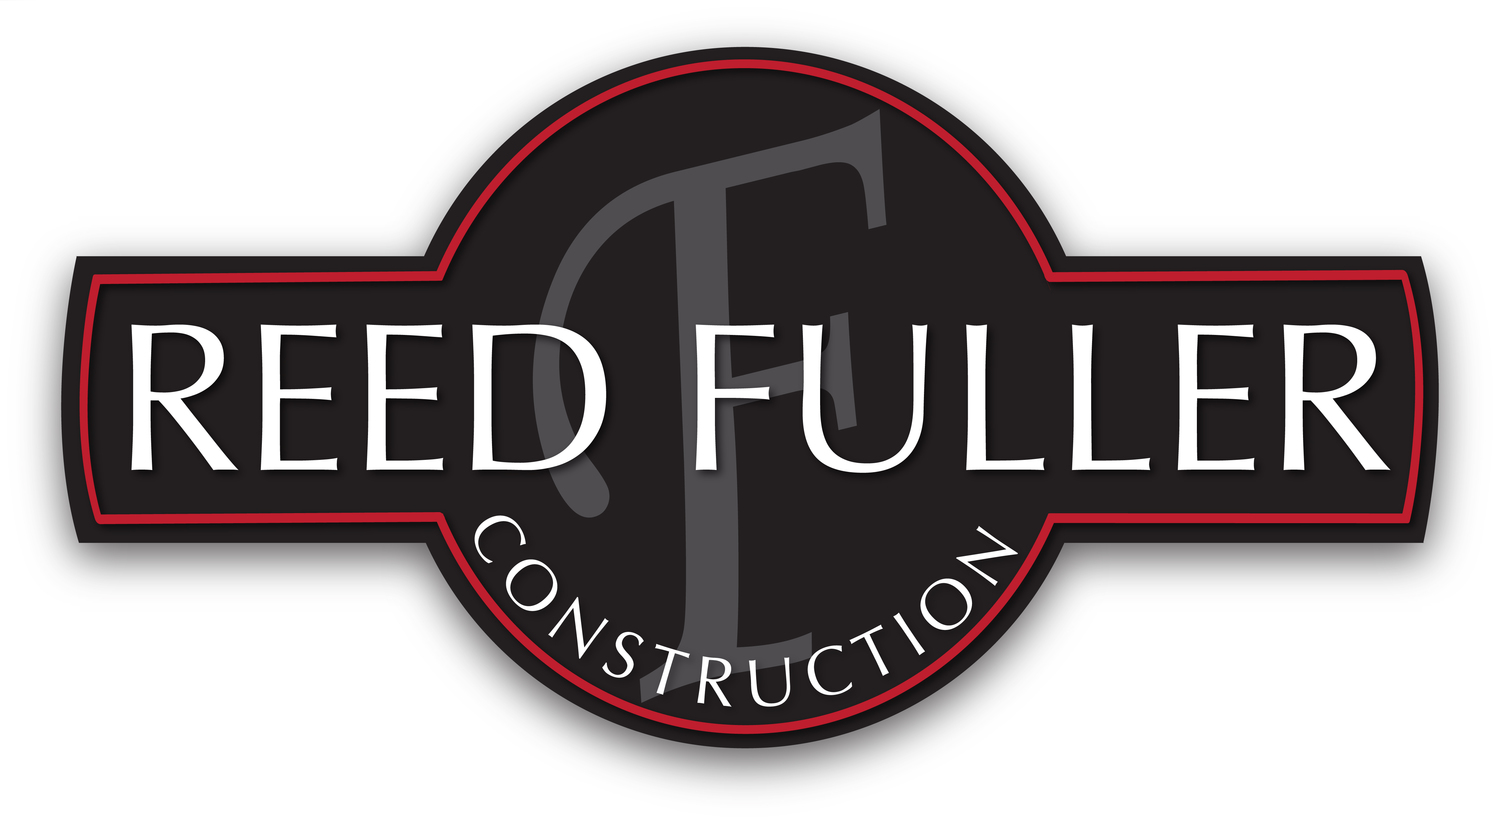 Reed Fuller Construction